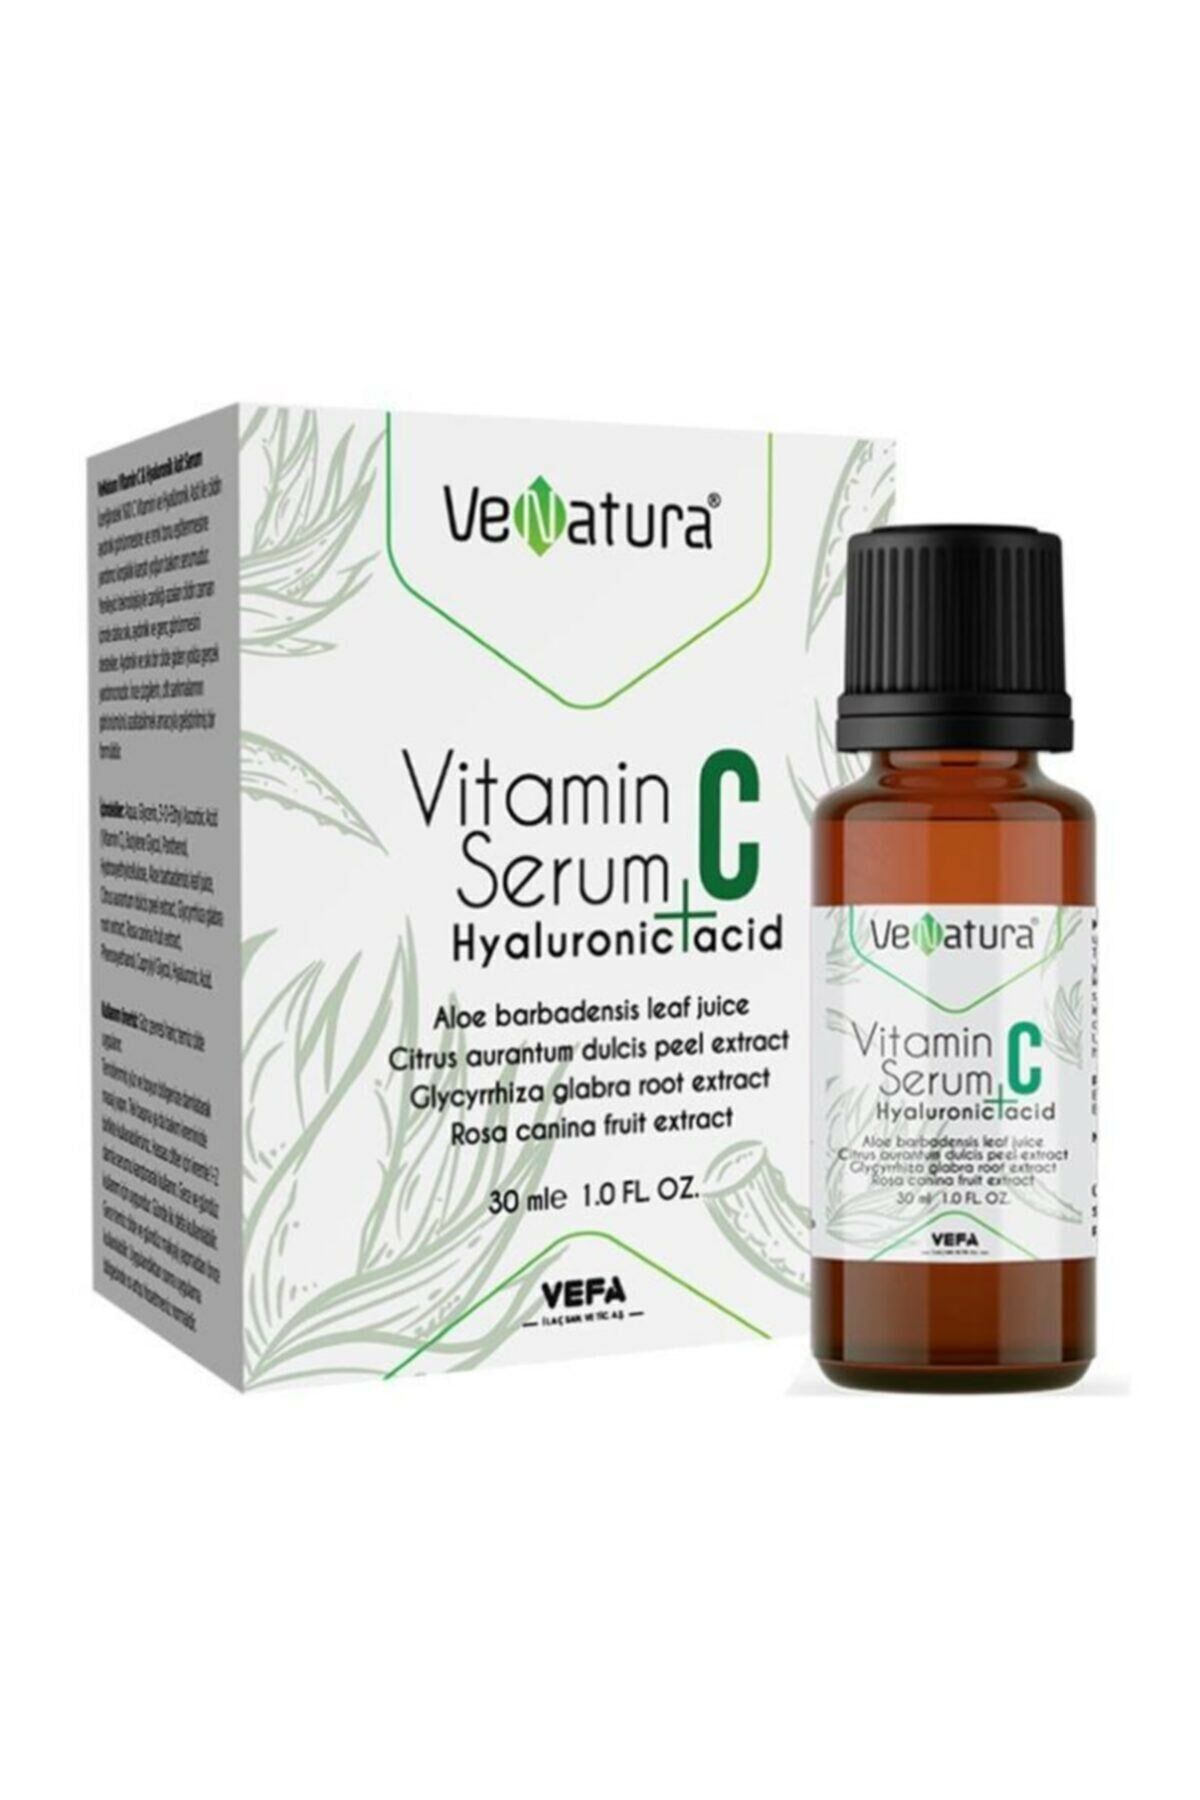 Venatura Vitamin C Serum + Hyaluronic Acid 30 ml